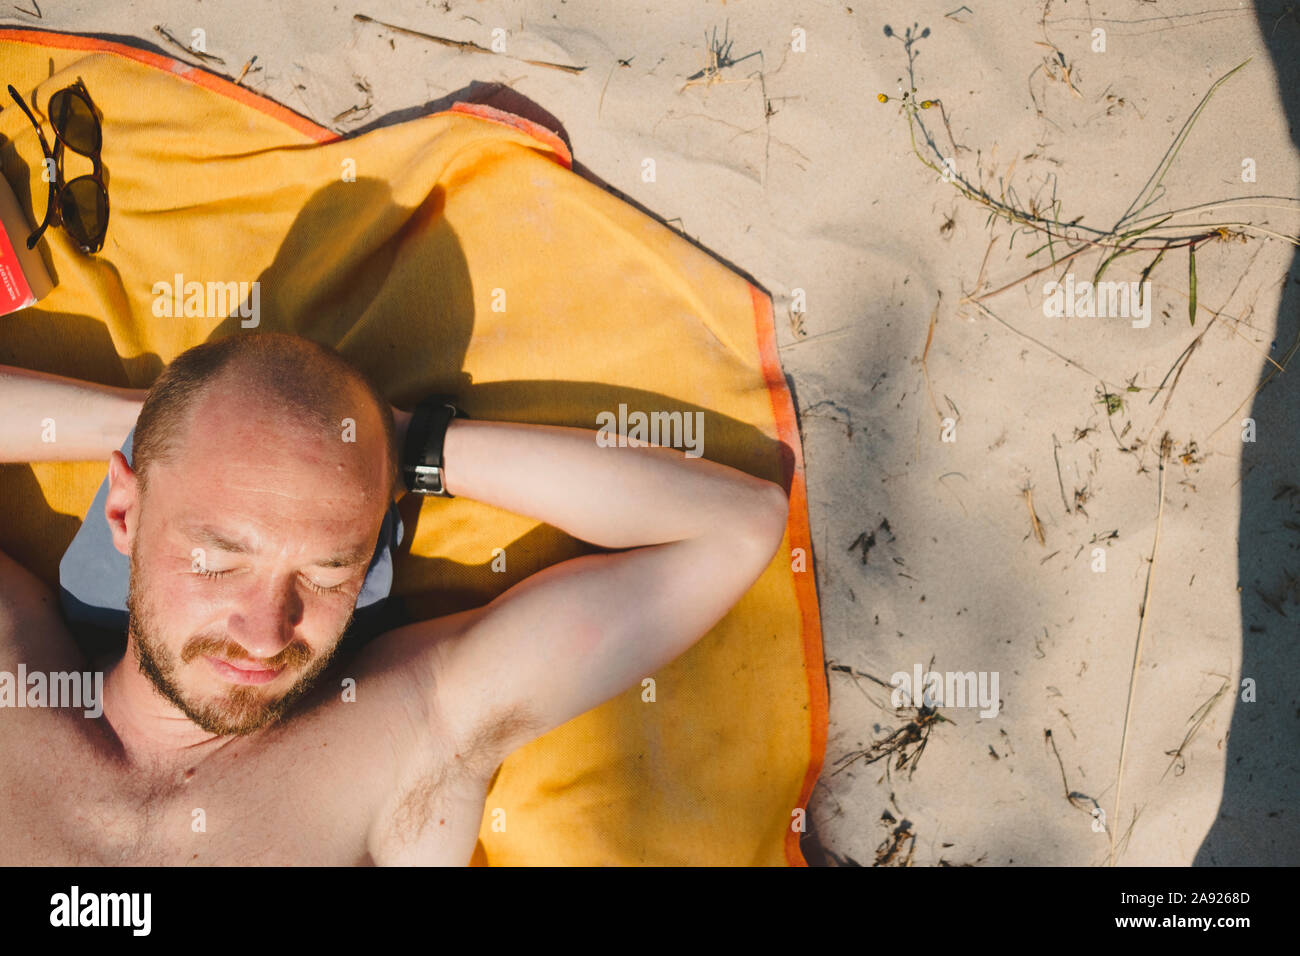 Man sunbathing Stock Photo